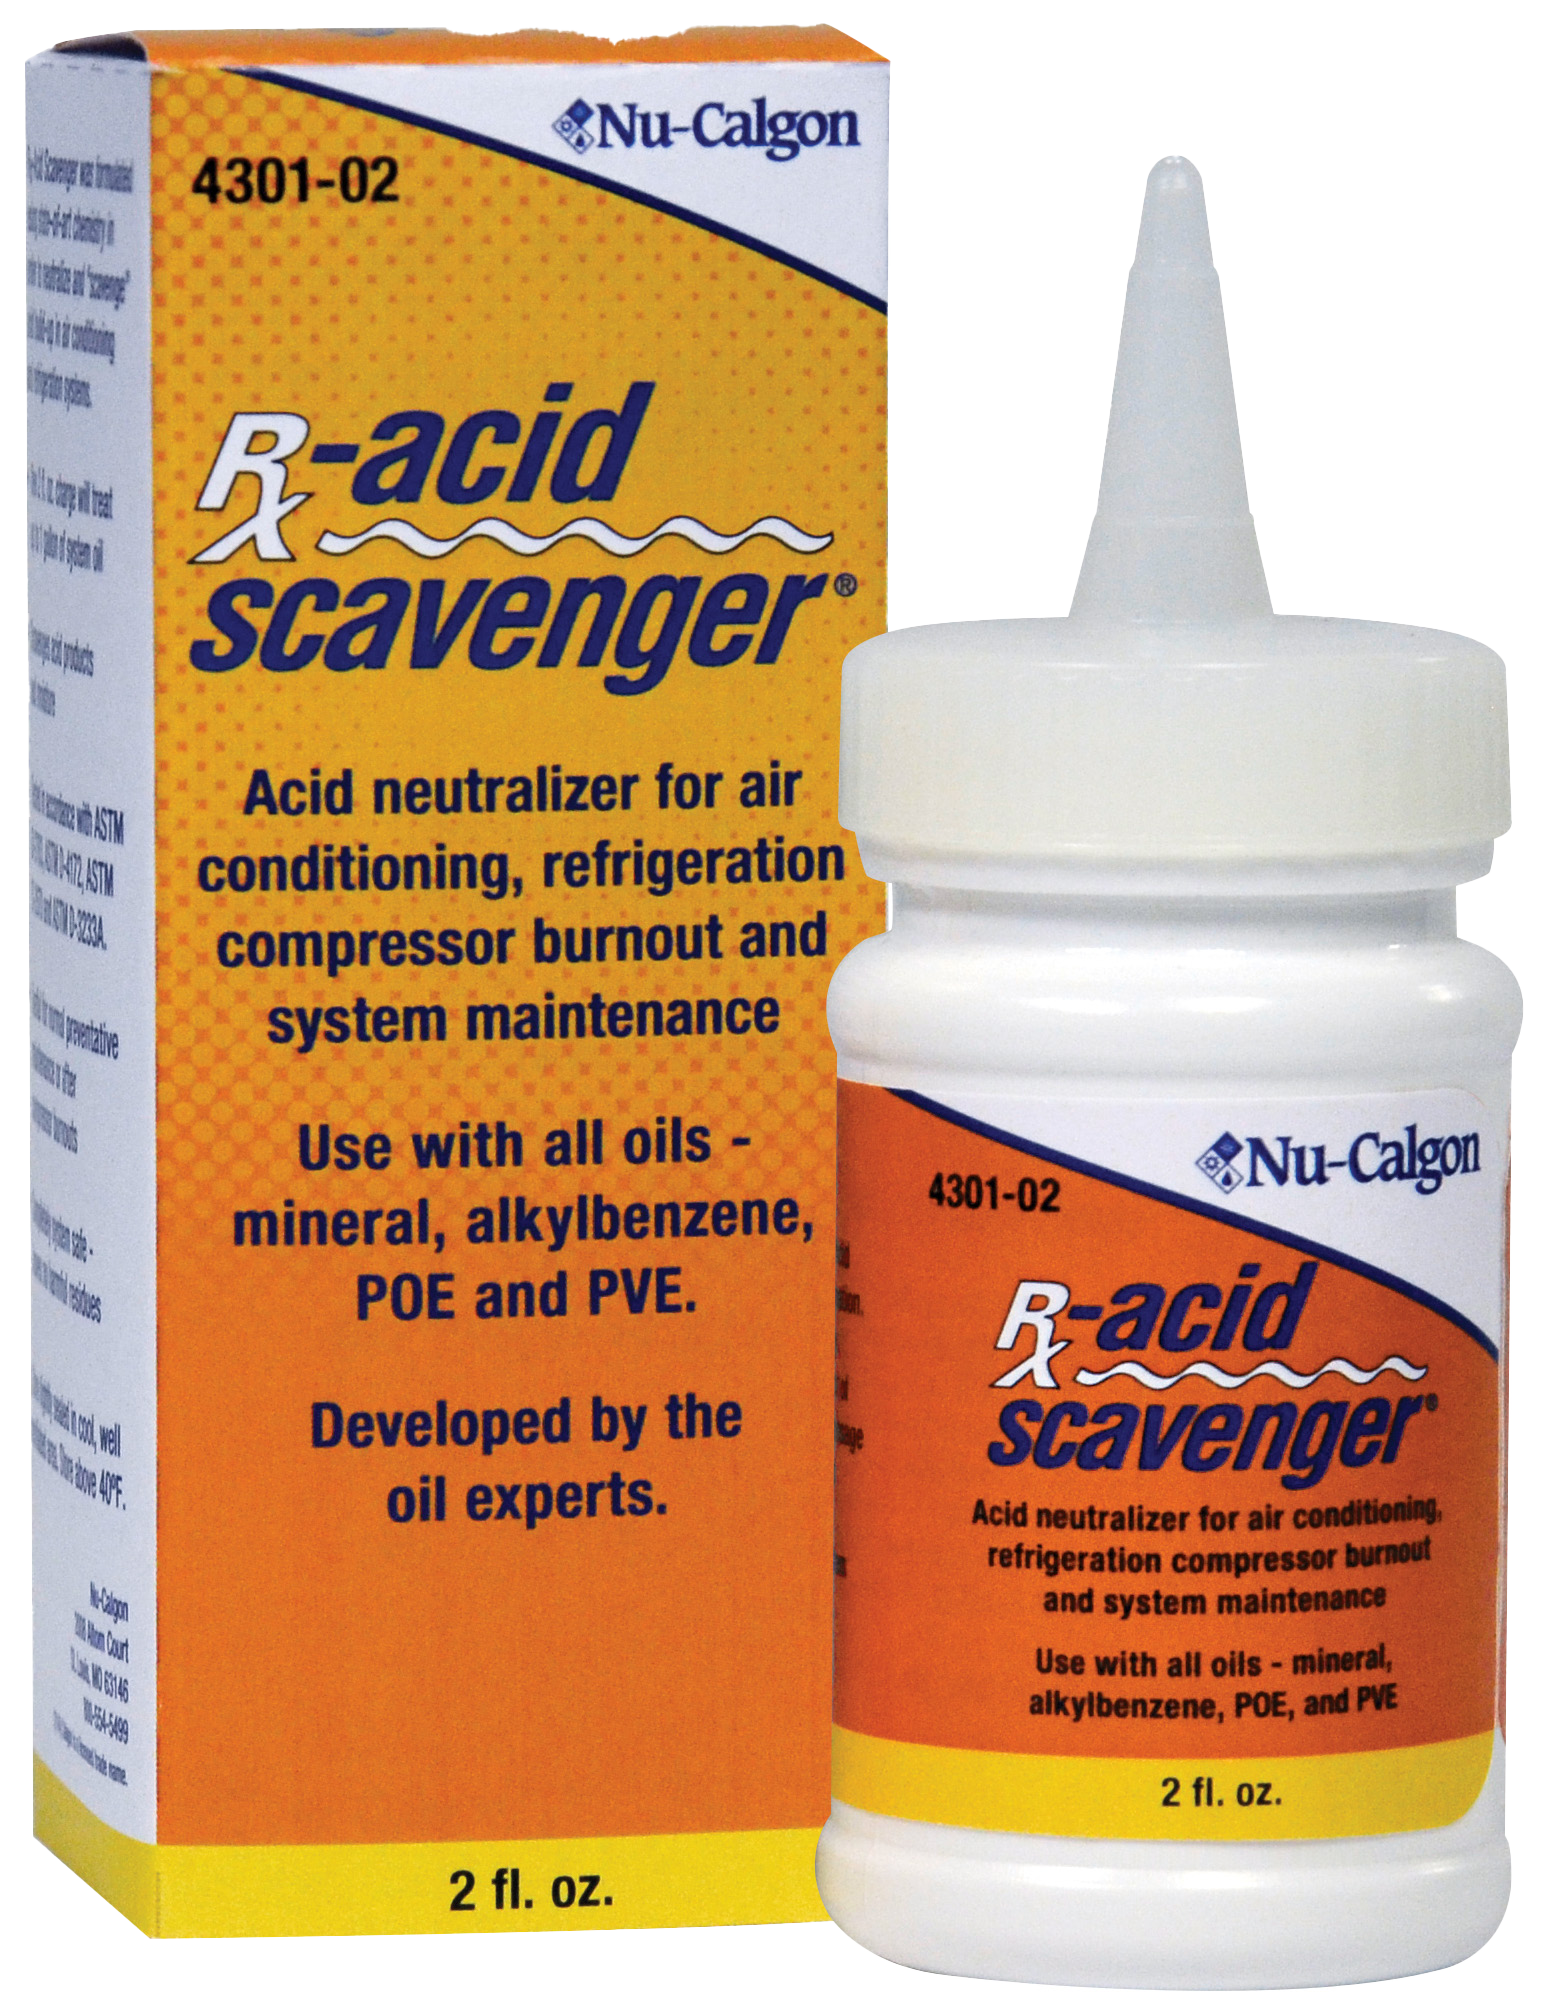 4301-02 RX-ACID SCAVENGER BOTTLE - Acid Tests and Neutralizers